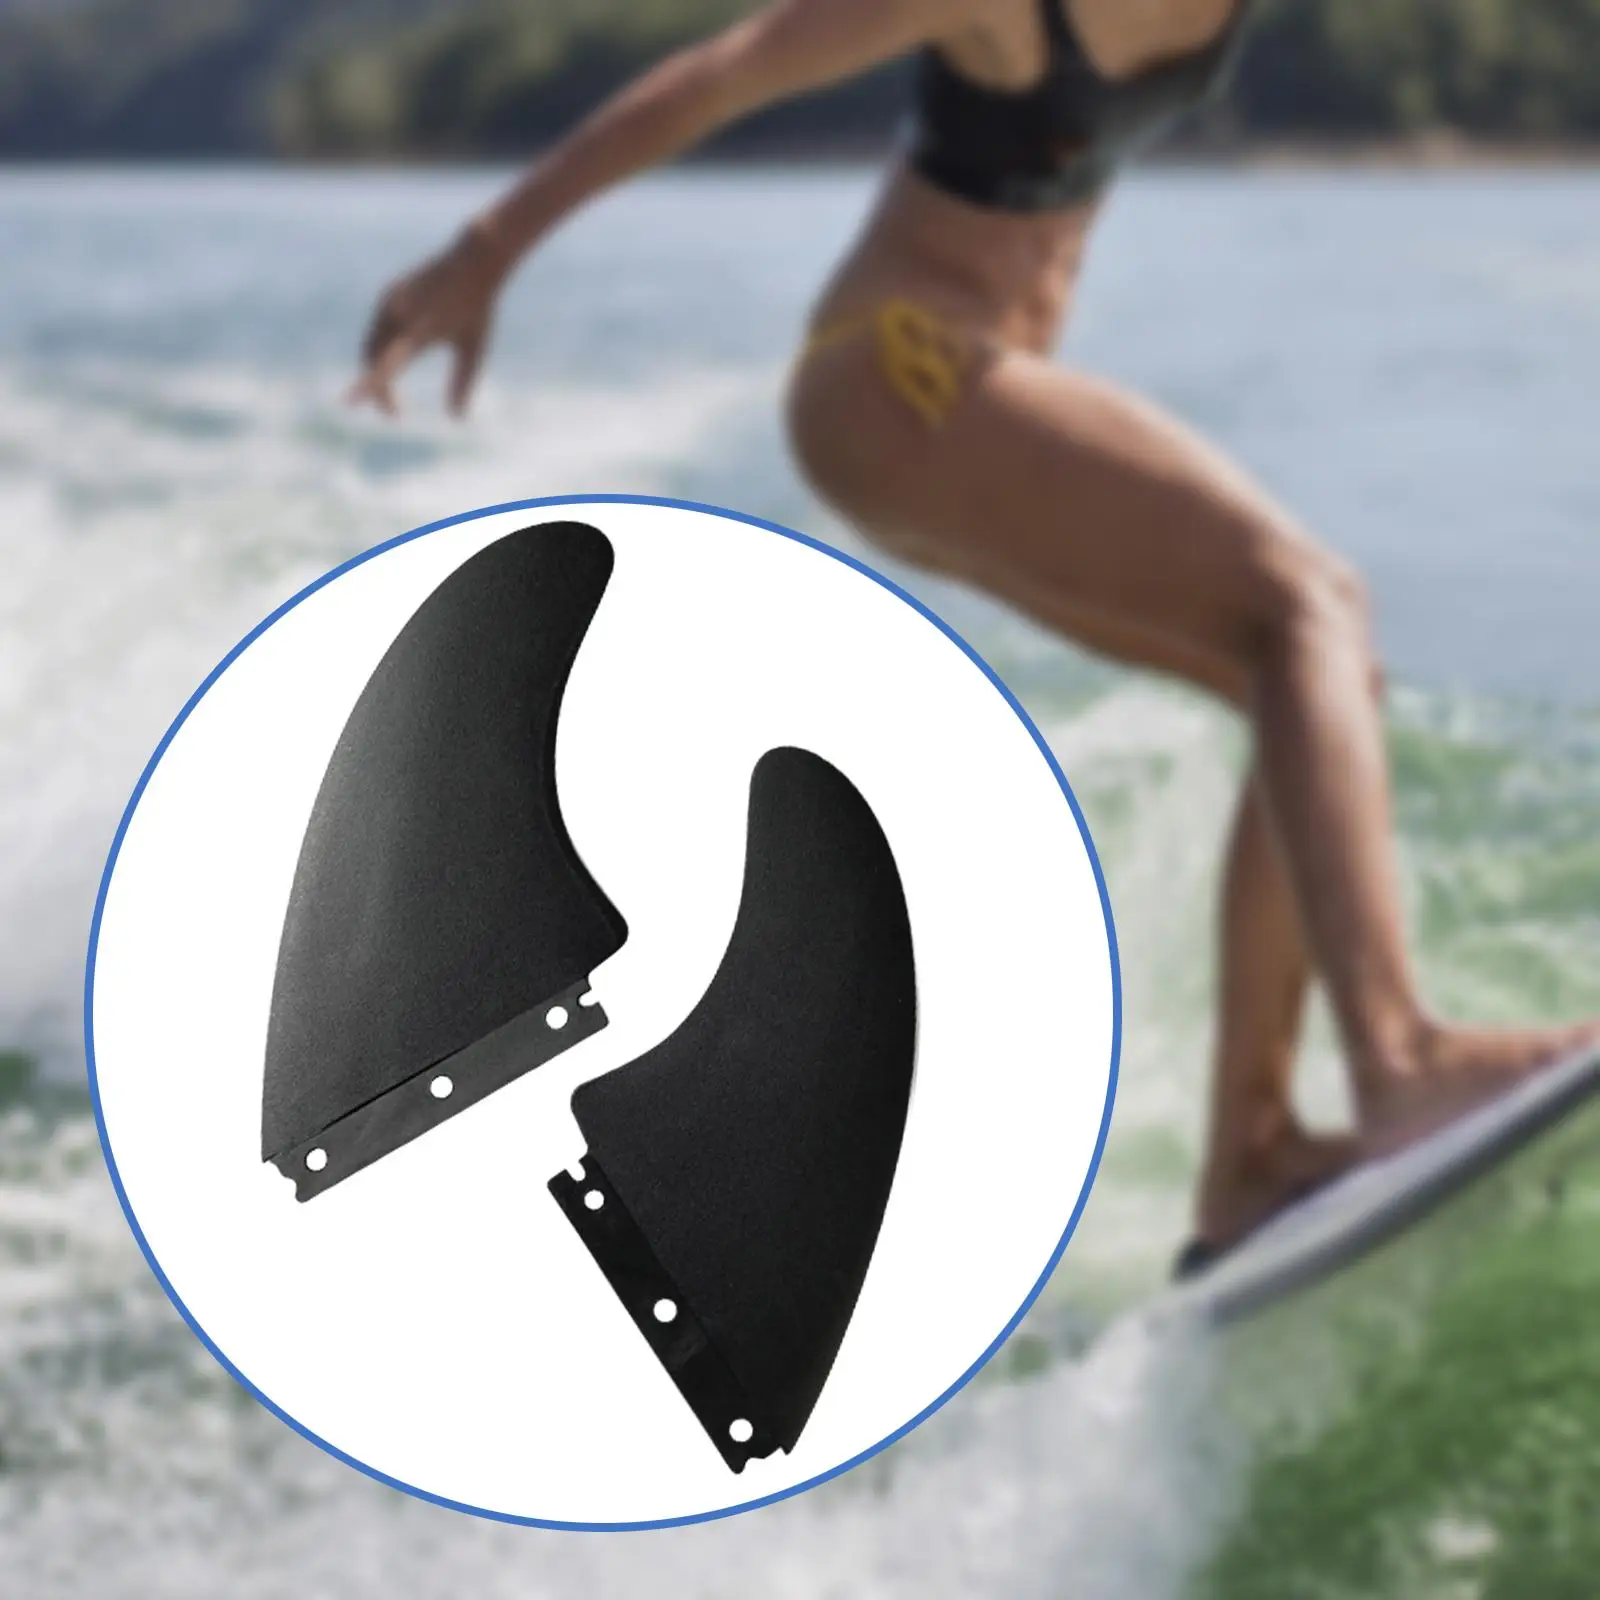 2x Universal Surfboard Fin, Detachable Water Distributor, Surf Durable